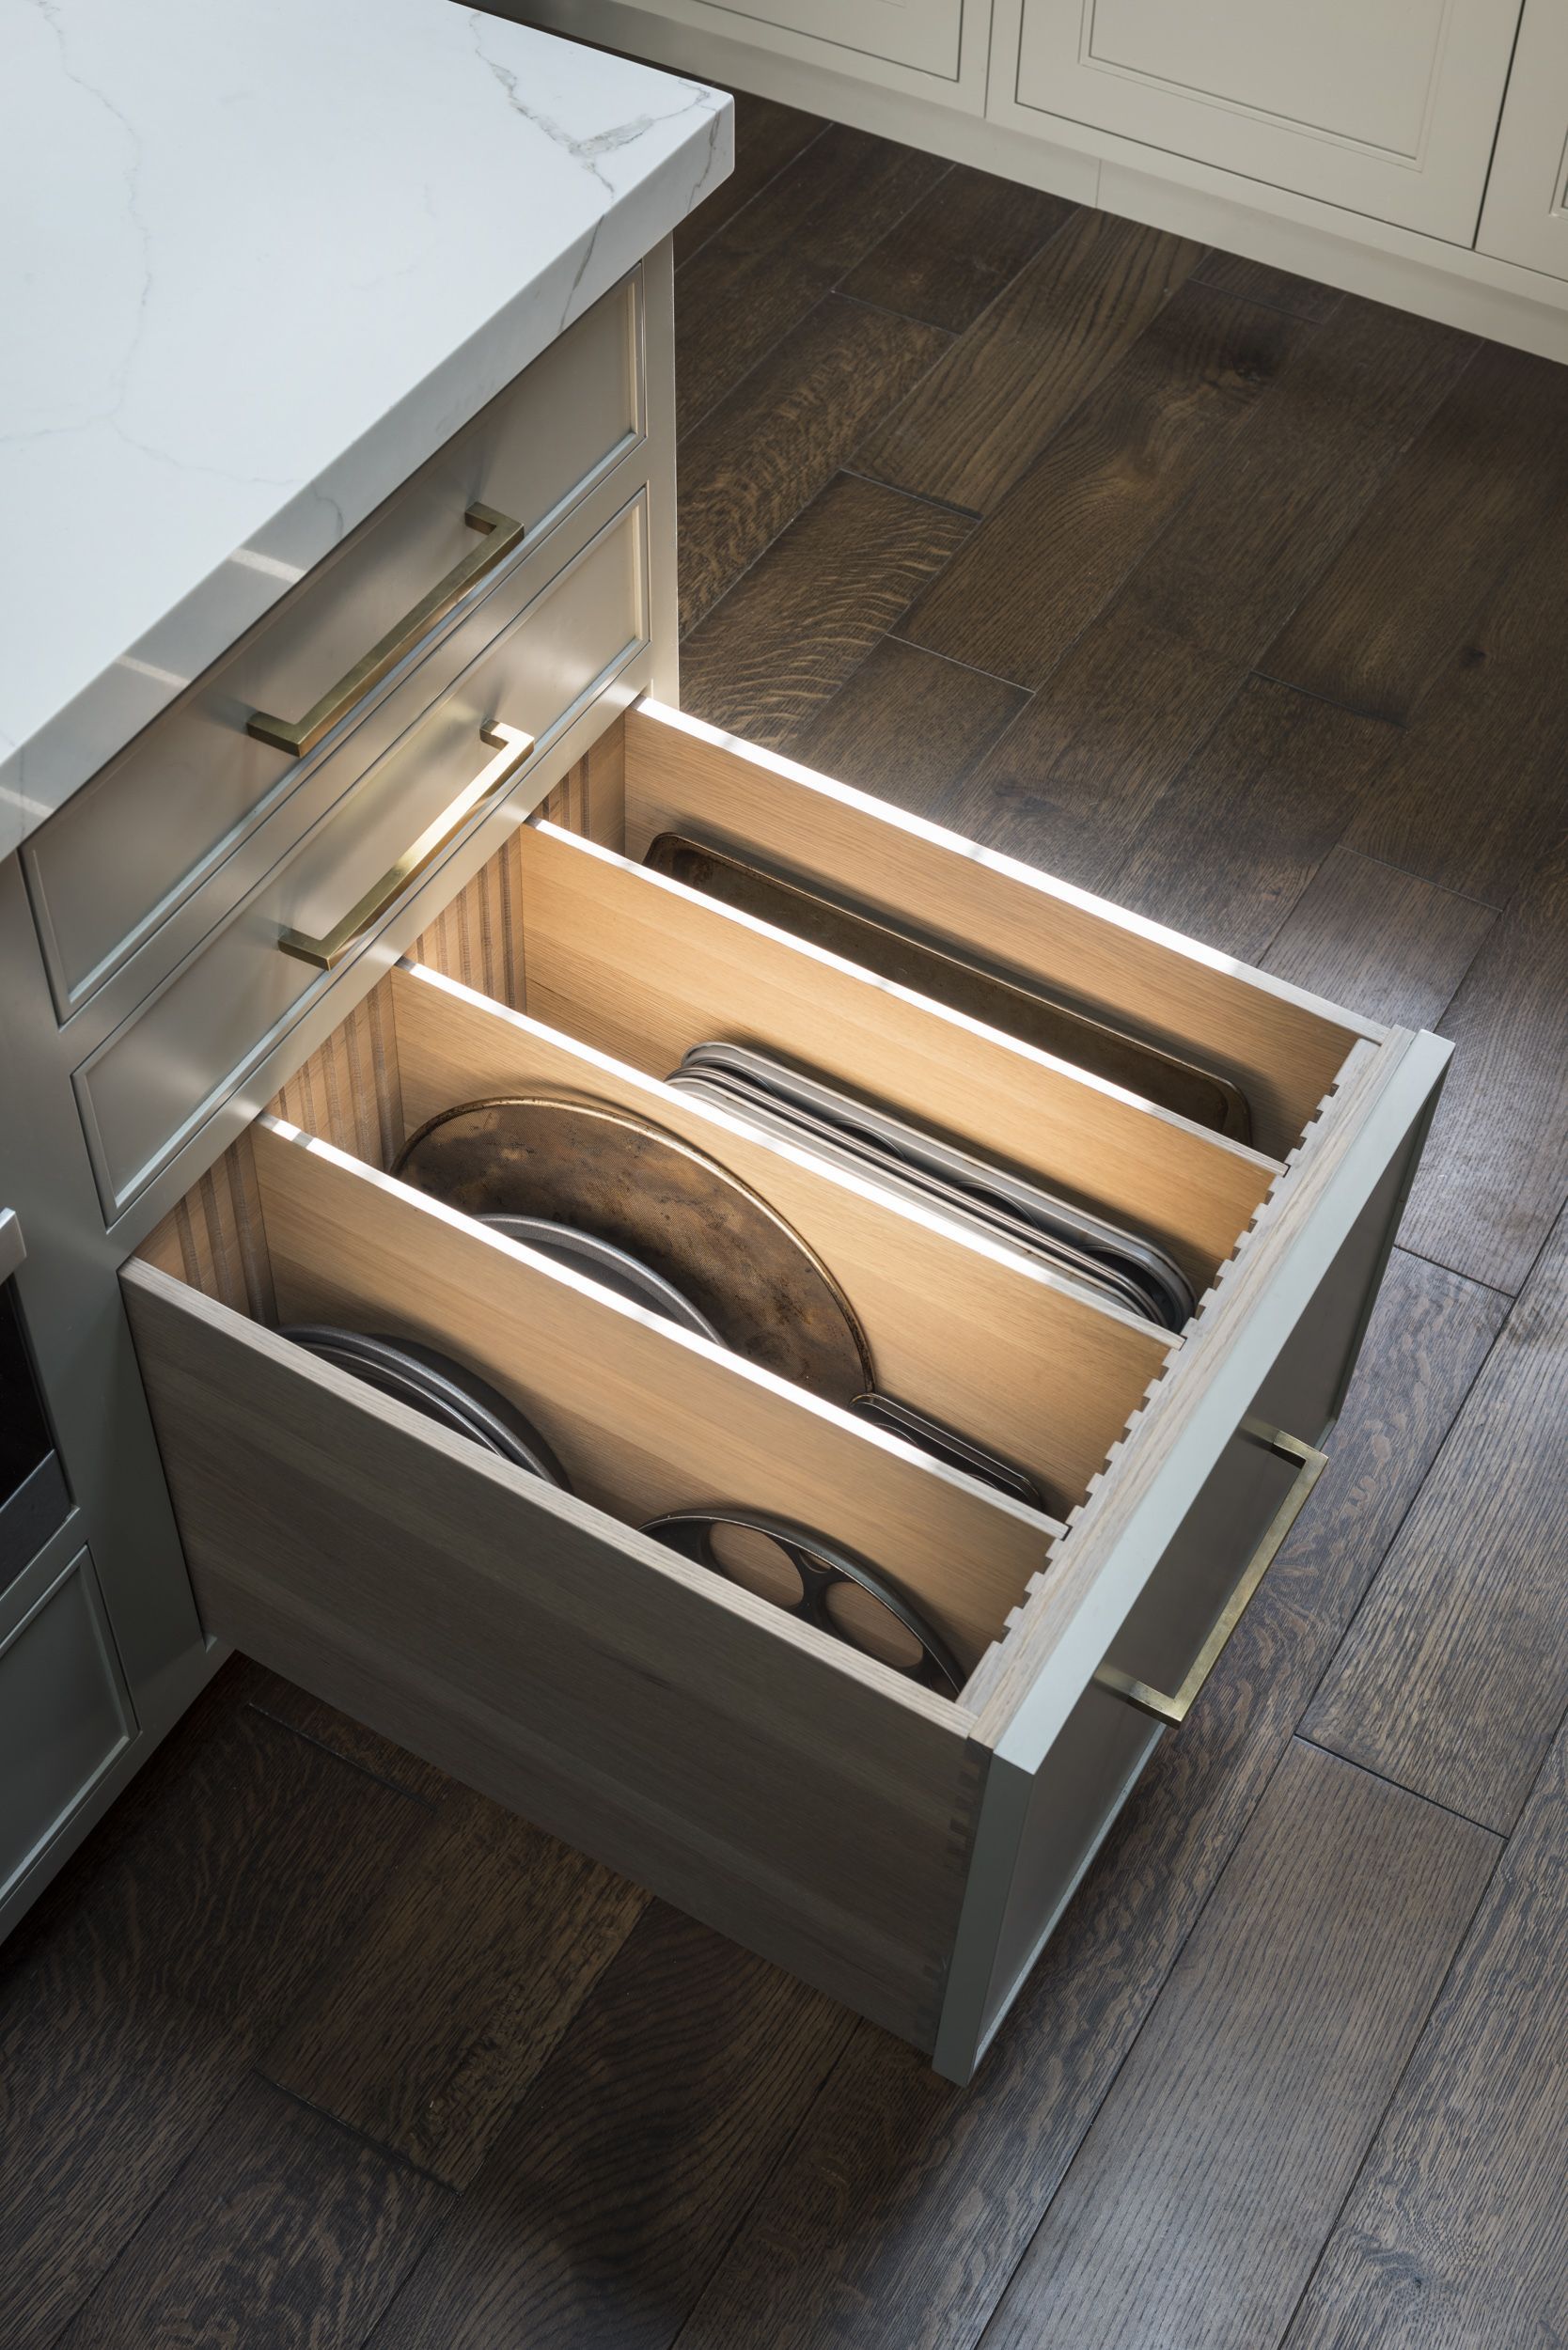 Versatile Tray and Pan Storage Deep Drawer for Kitchen Organization by Studio Dearborn -   19 diy Kitchen tools ideas